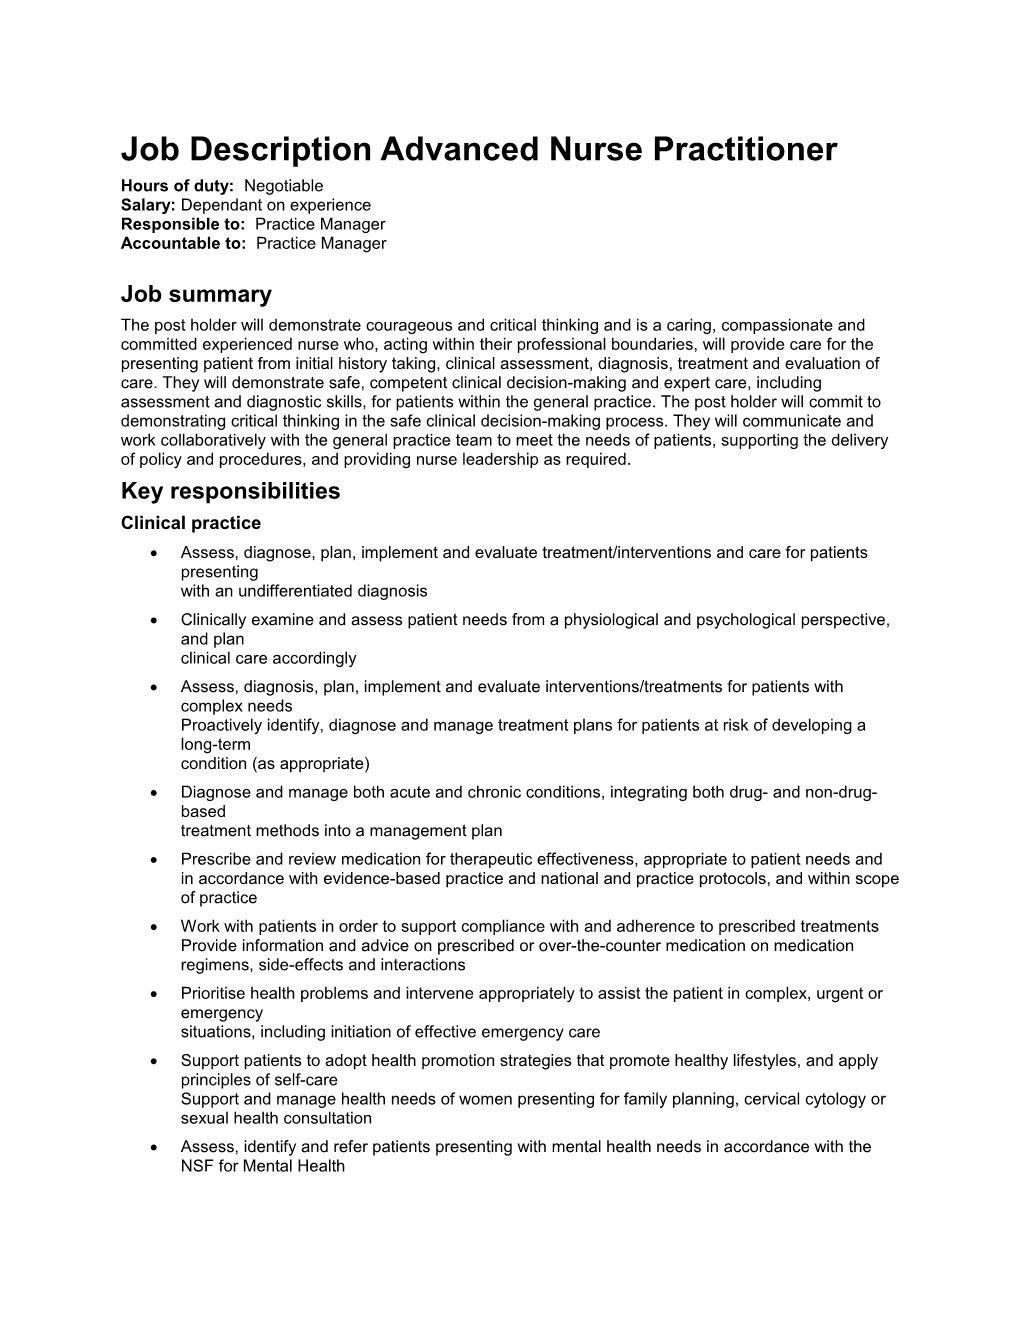 Job Description Advanced Nurse Practitioner